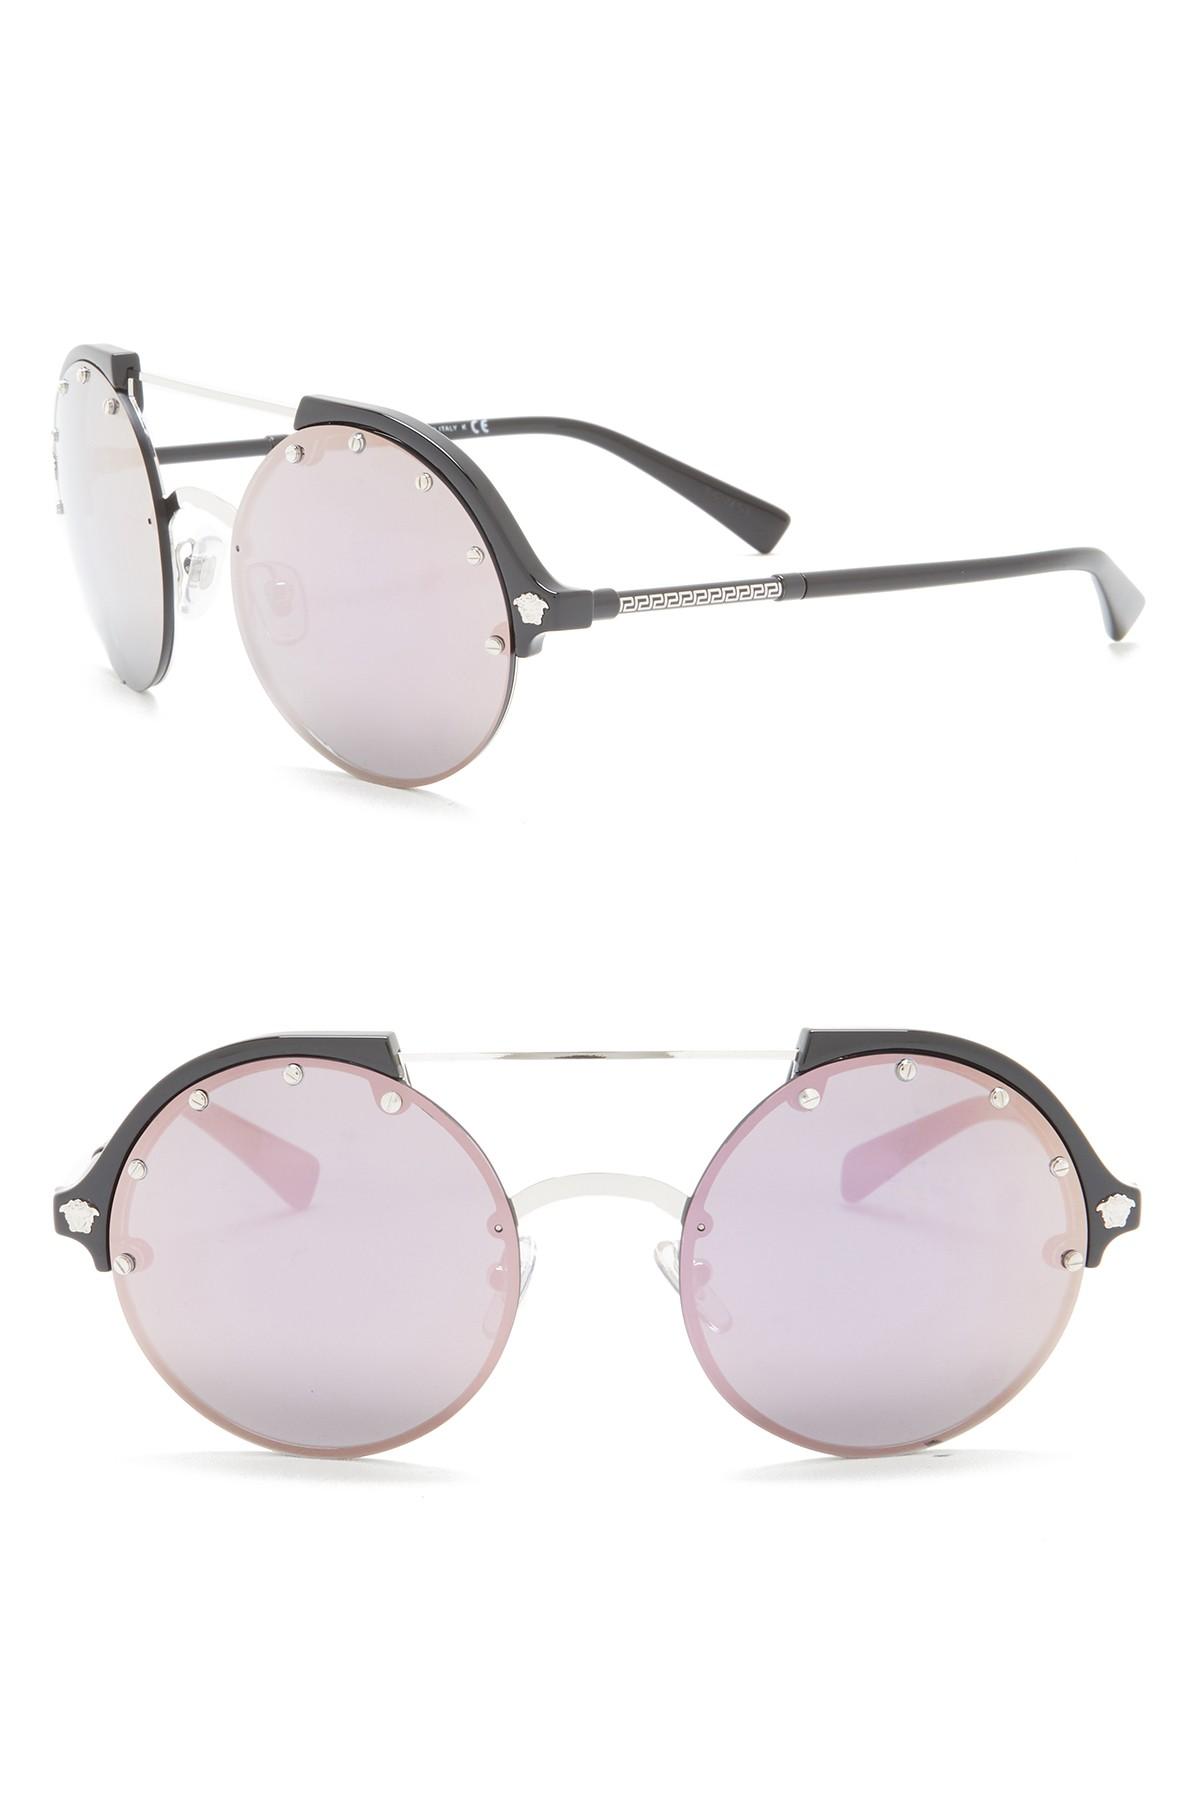 versace 53mm round sunglasses